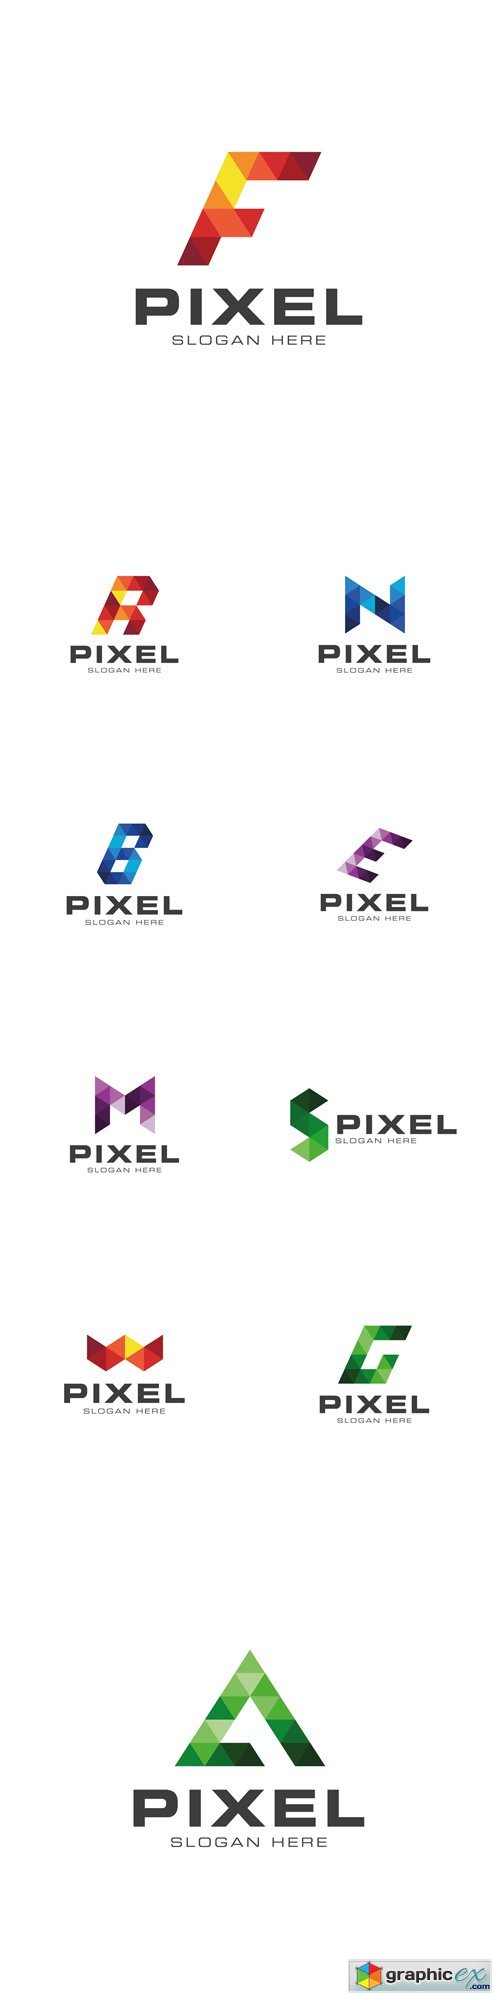 Modern Pixelated Logo Template